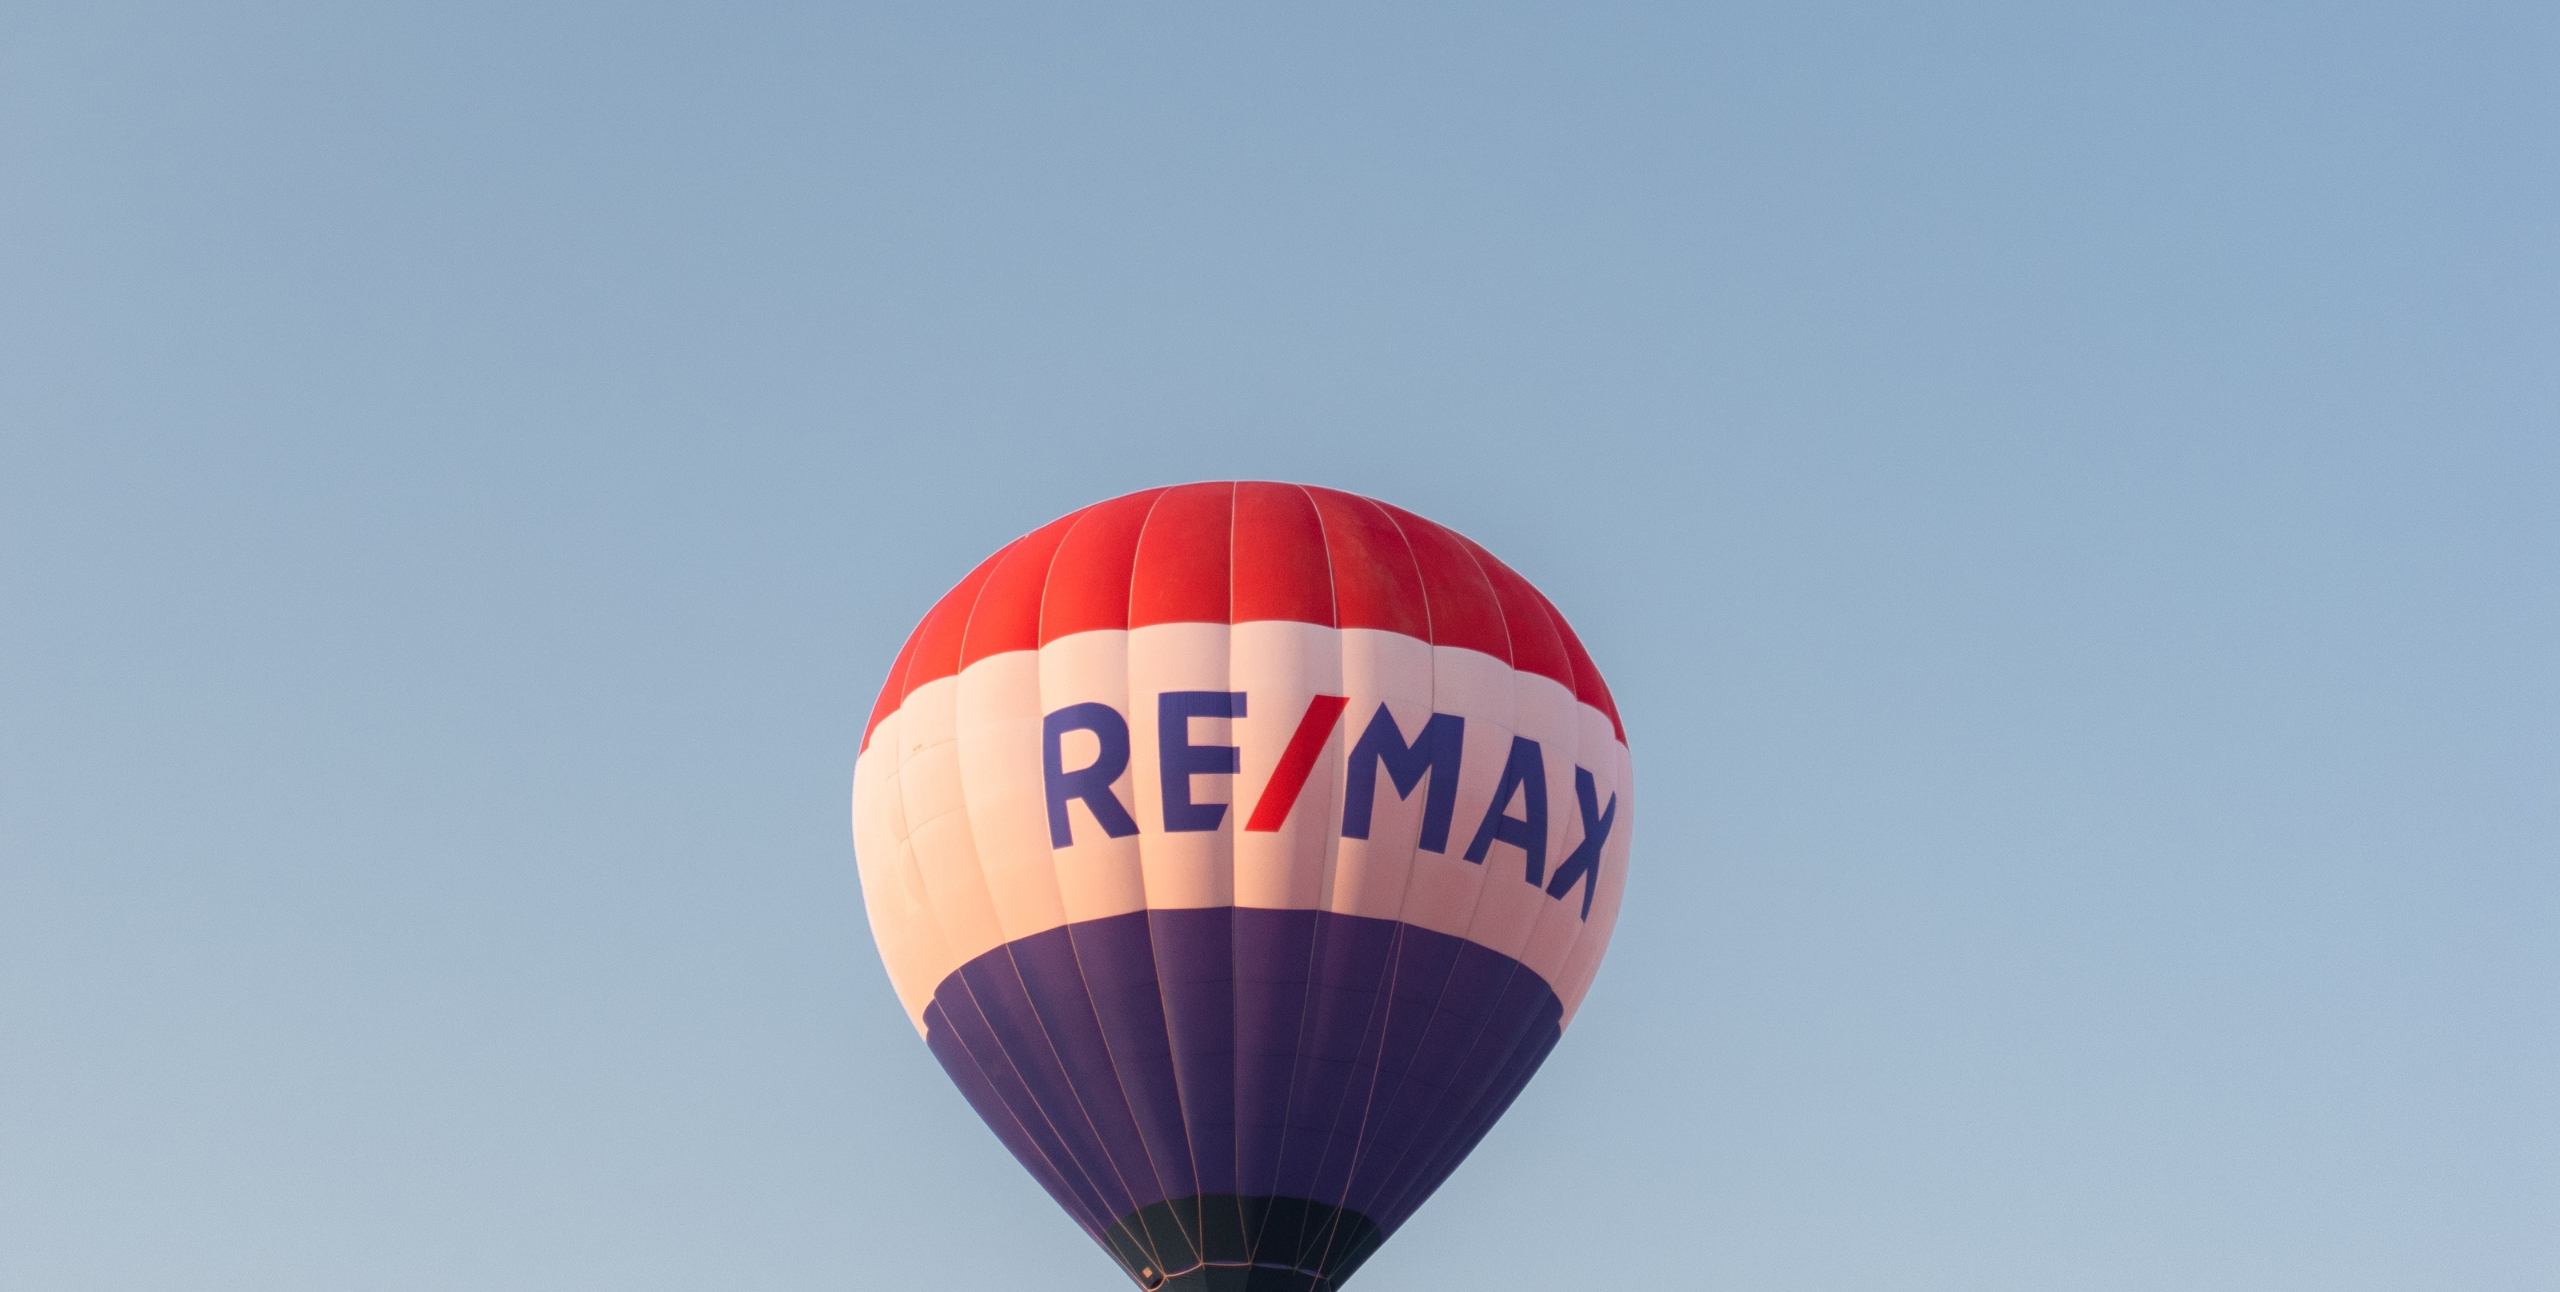 re/max/ balloon